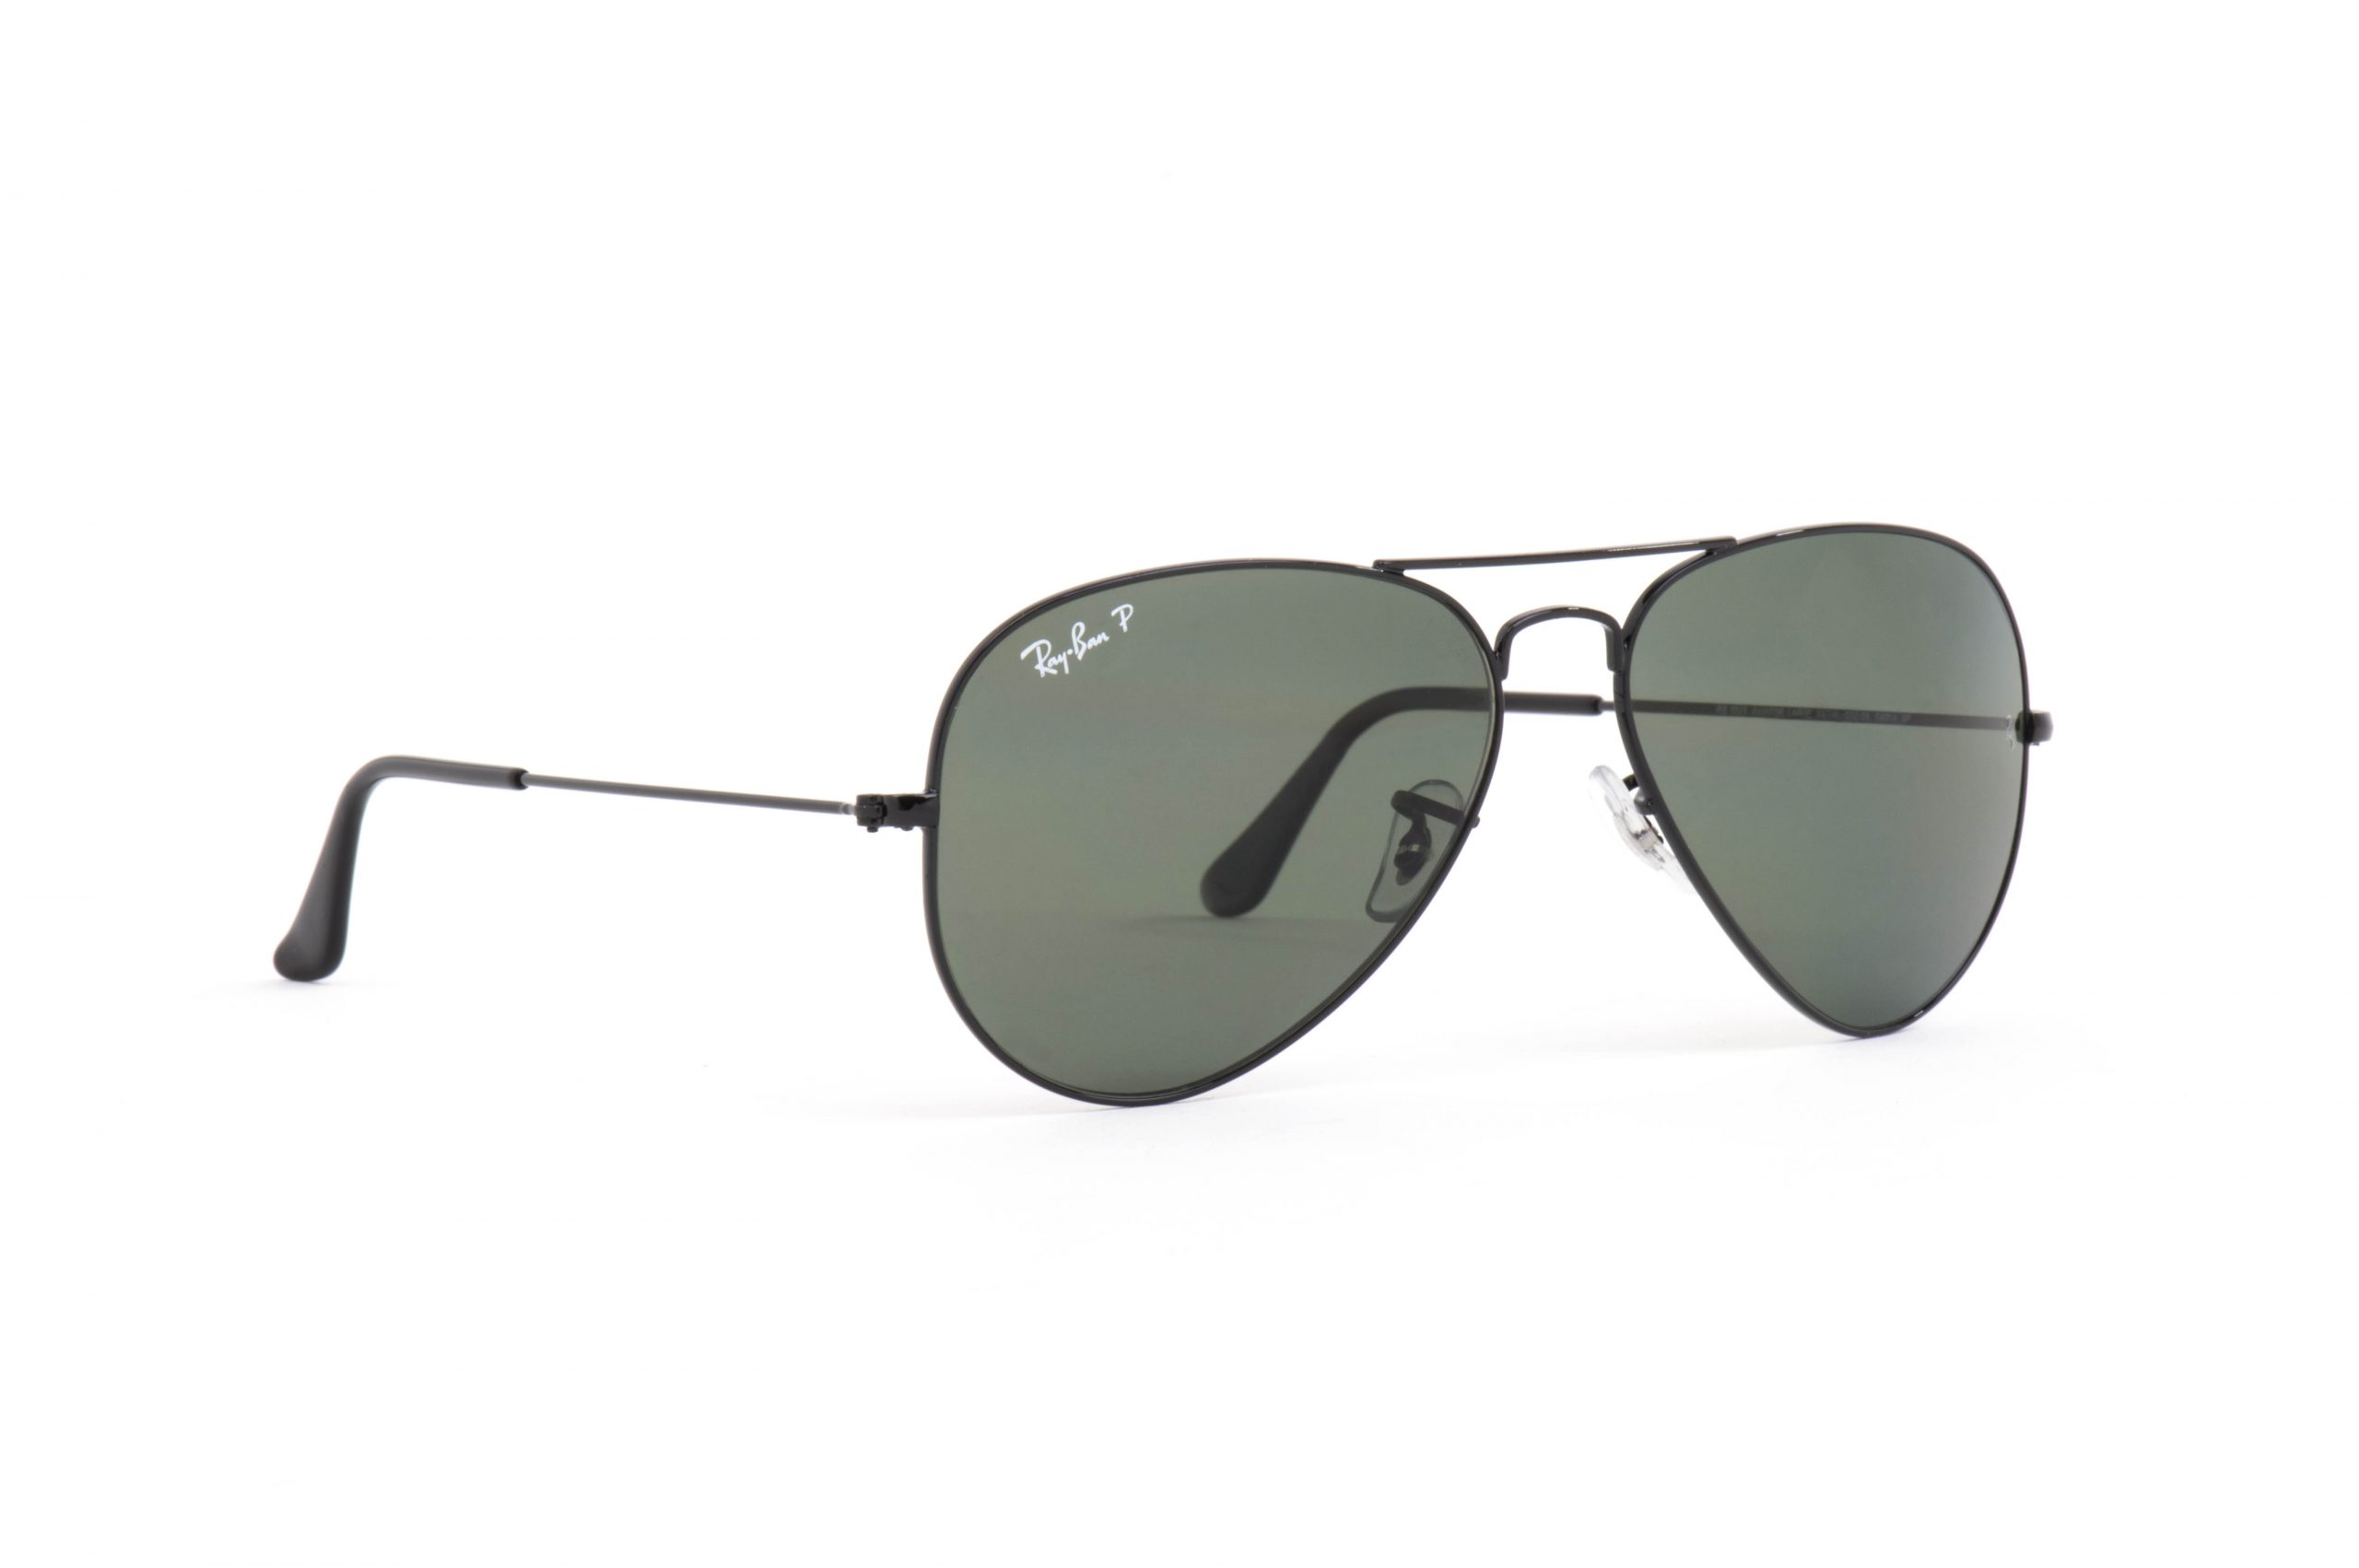 % RAYBAN Sunglasses Aviator RB 3025 002/58 Green | عالم النظارات السعودية